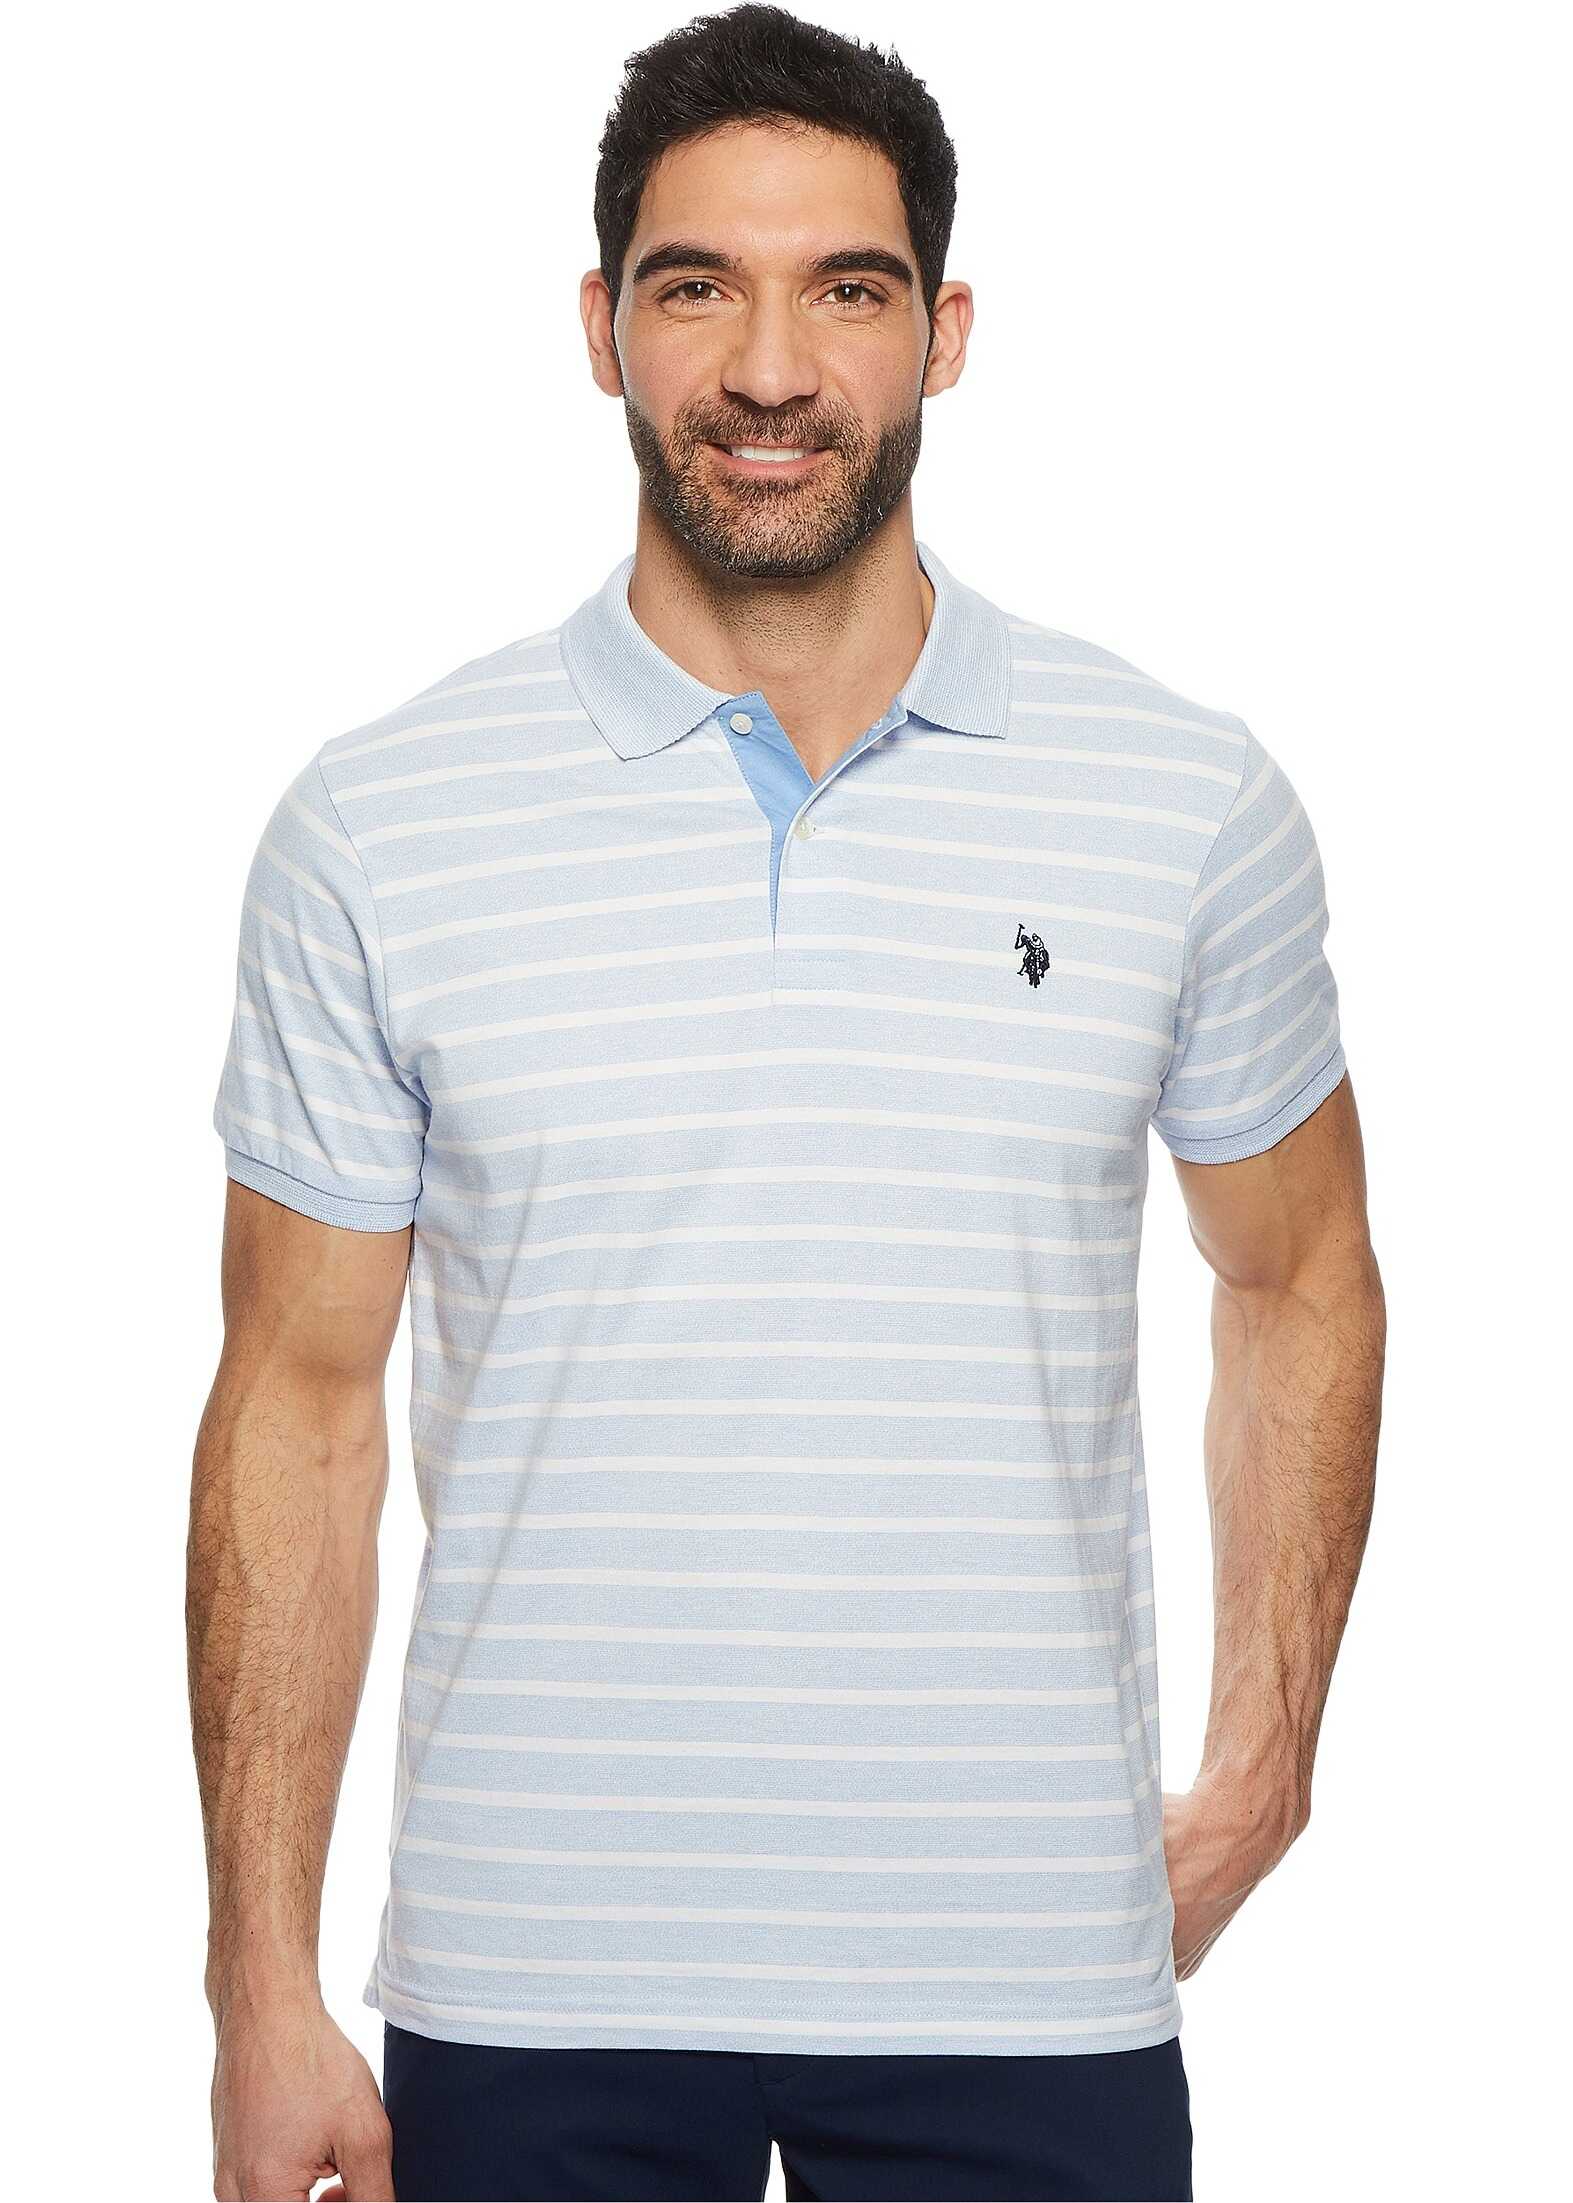 U.S. POLO ASSN. Marled Stripe Jersey Polo Shirt Artist Blue